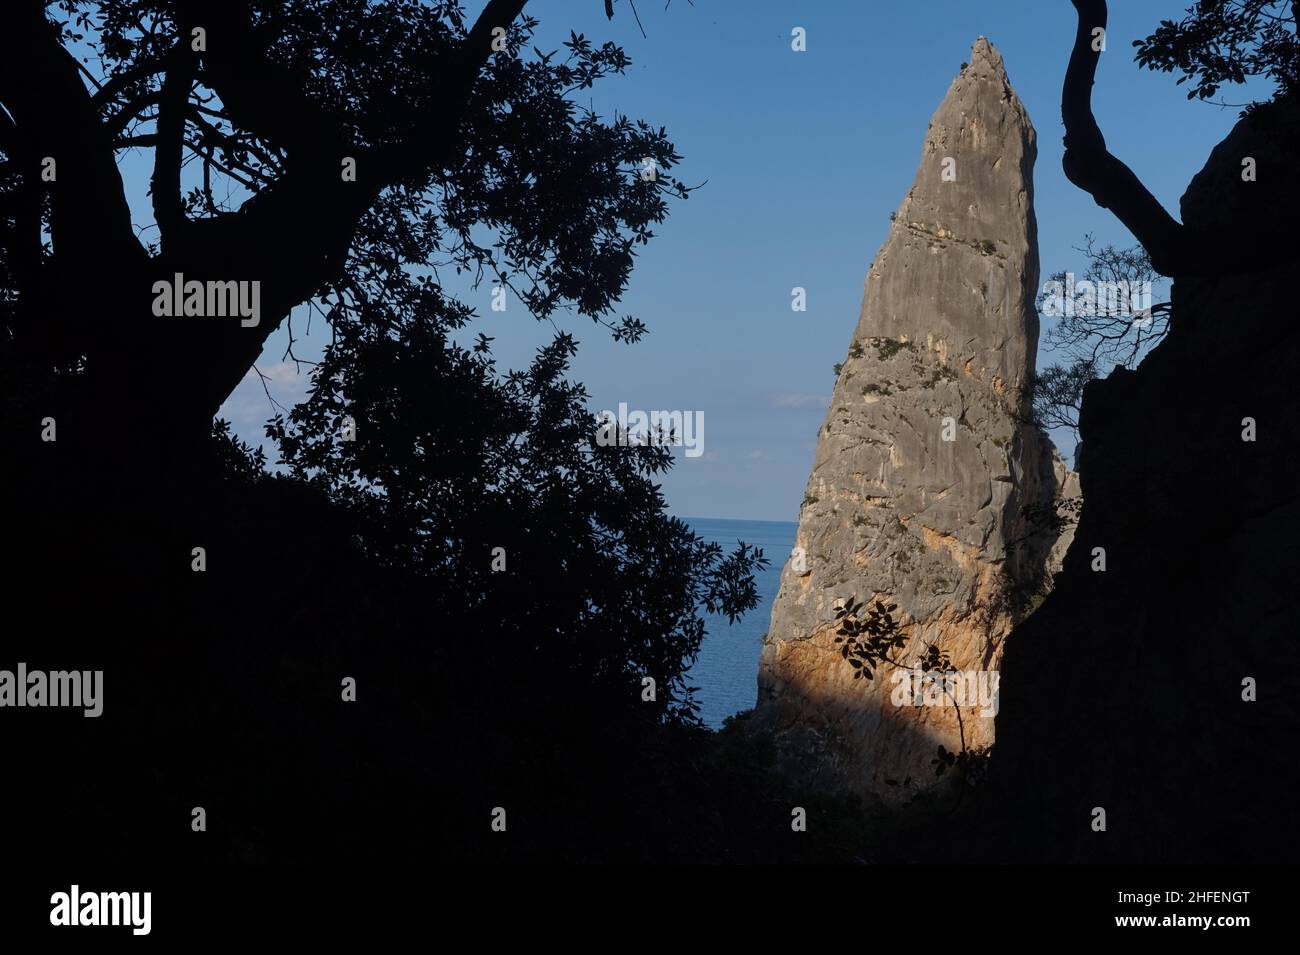 Cala Gloloritze, the steepest rock needle of the world? Stock Photo